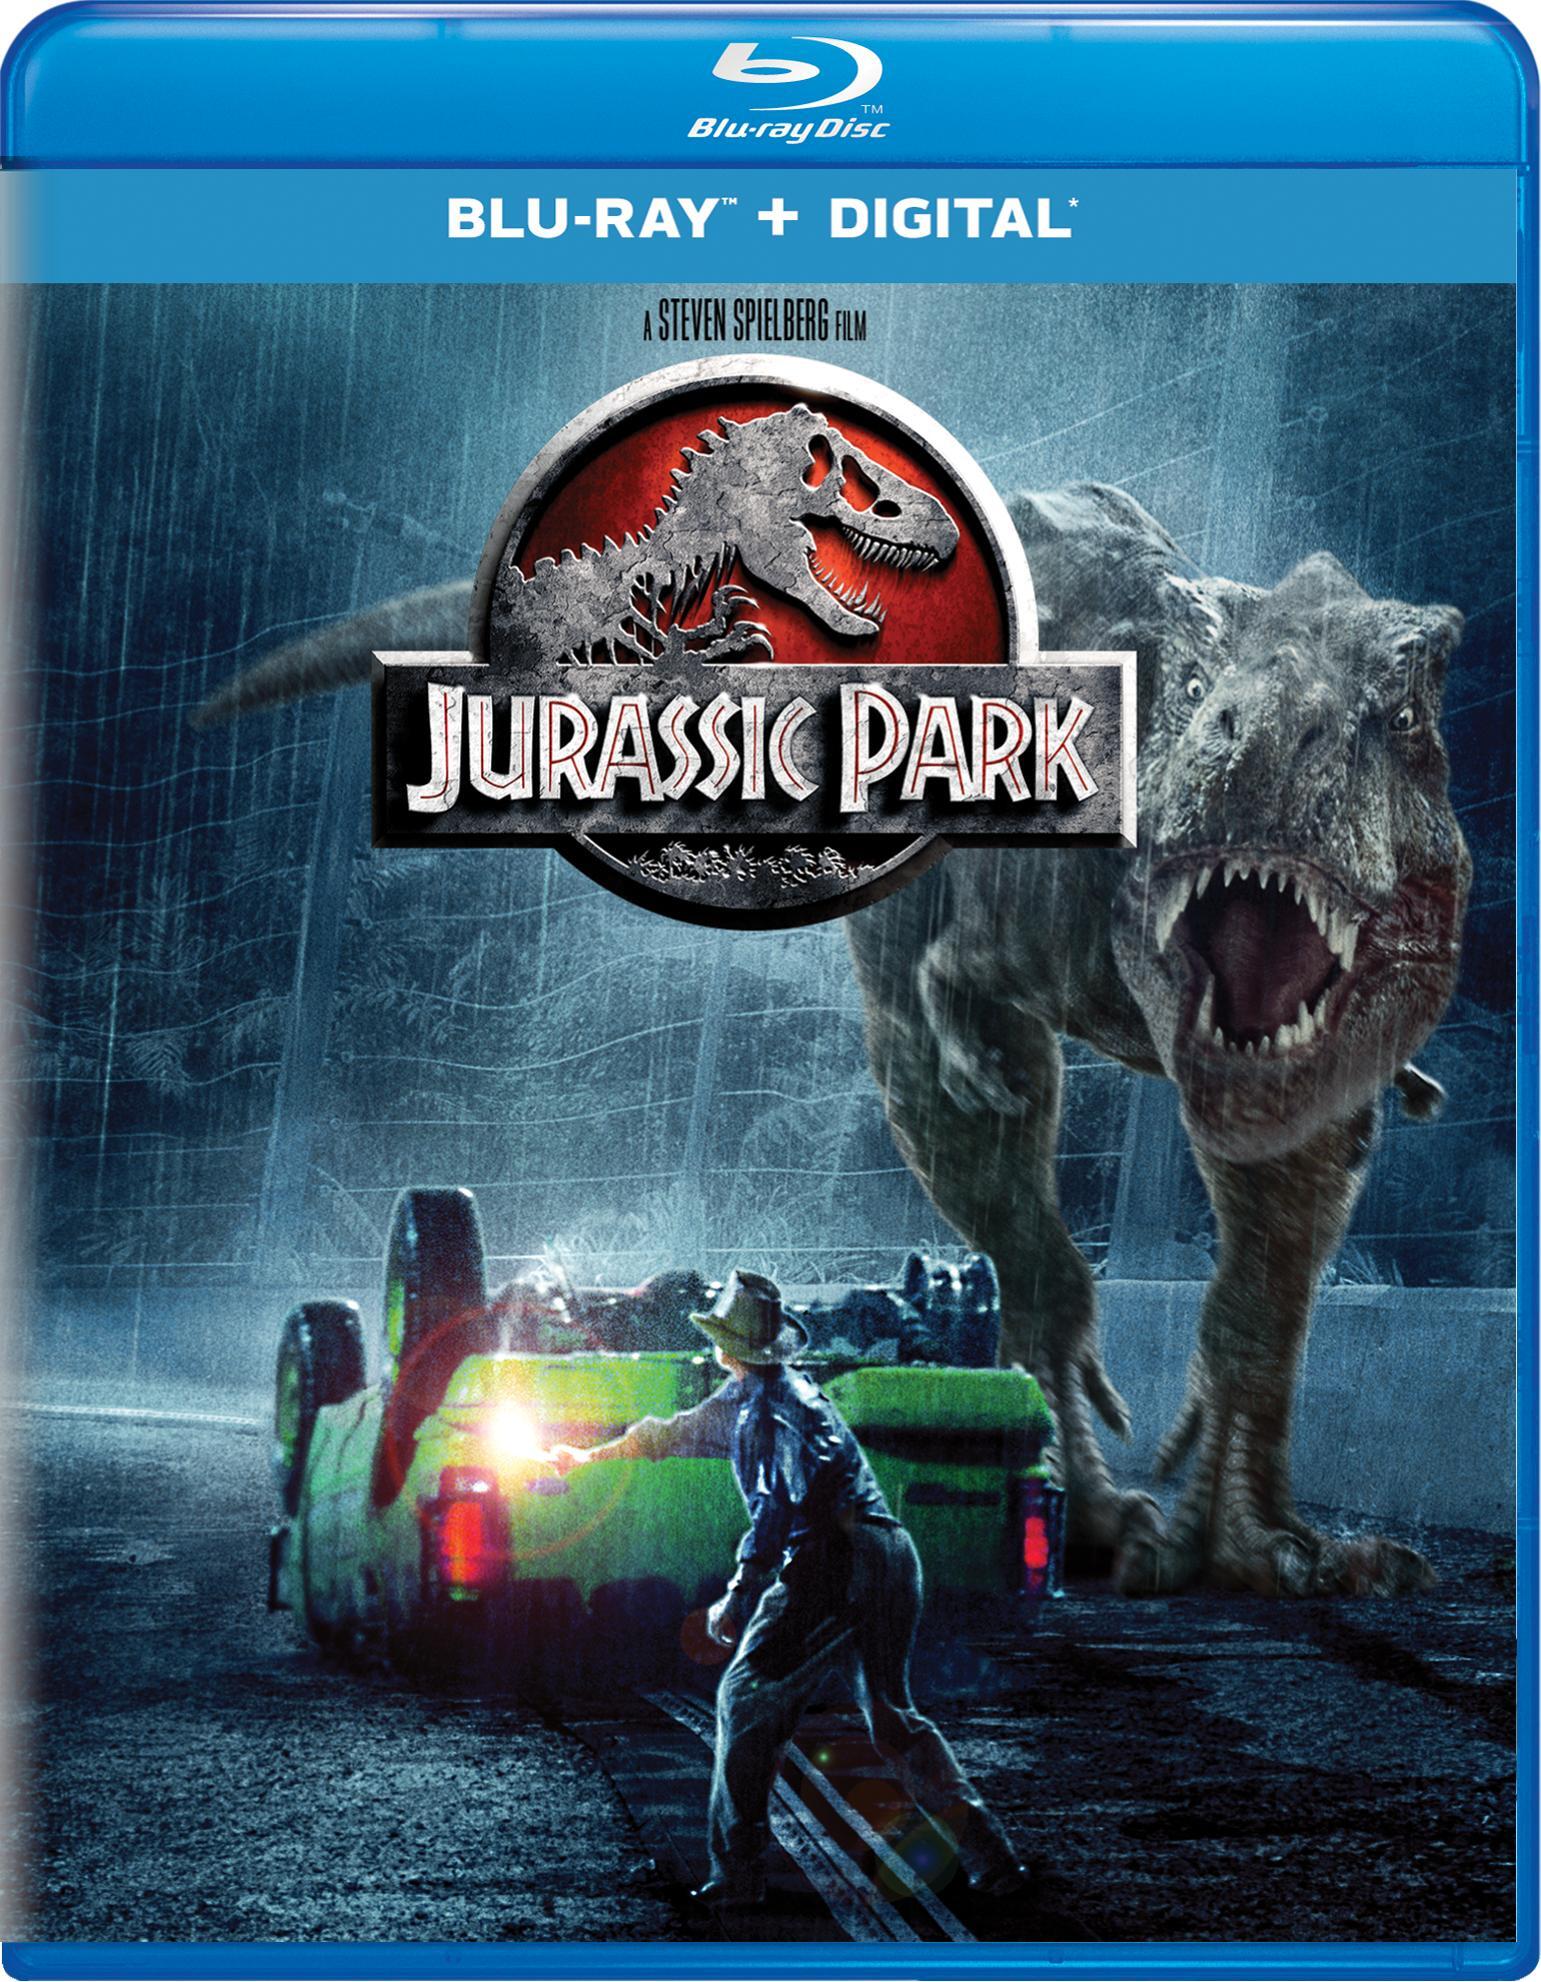 Jurassic Park (Blu-ray New Box Art) - Blu-ray [ 1993 ]  - Adventure Movies On Blu-ray - Movies On GRUV